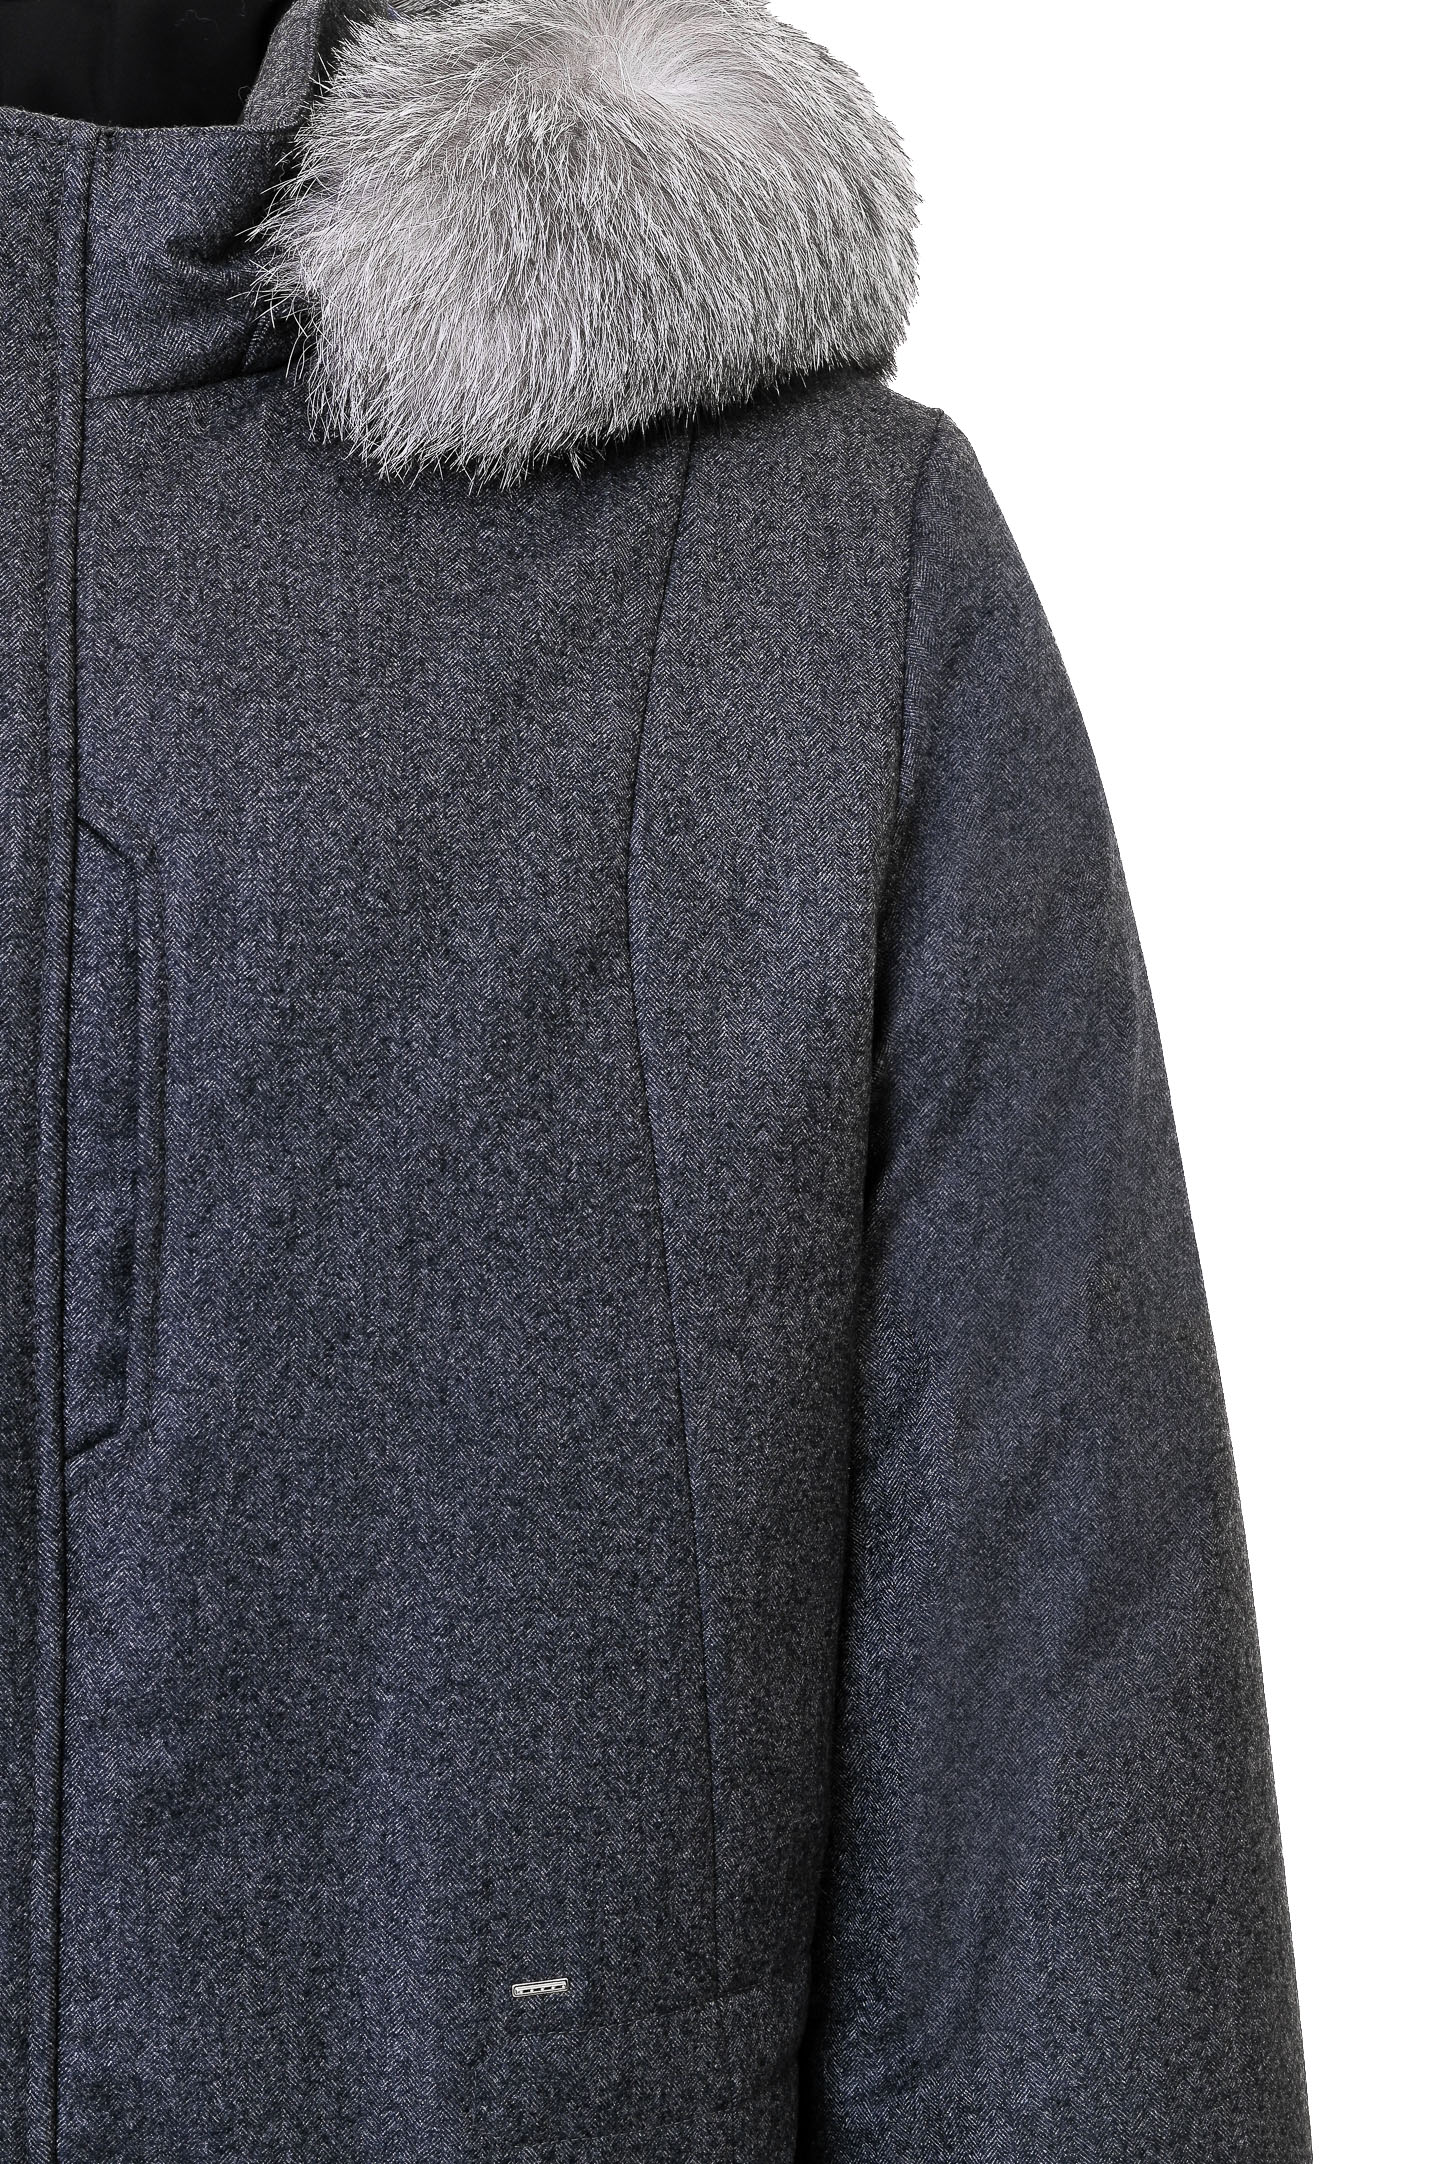 Куртка STEFANO RICCI MDJ1400070 WC001I, цвет: Серый, Мужской